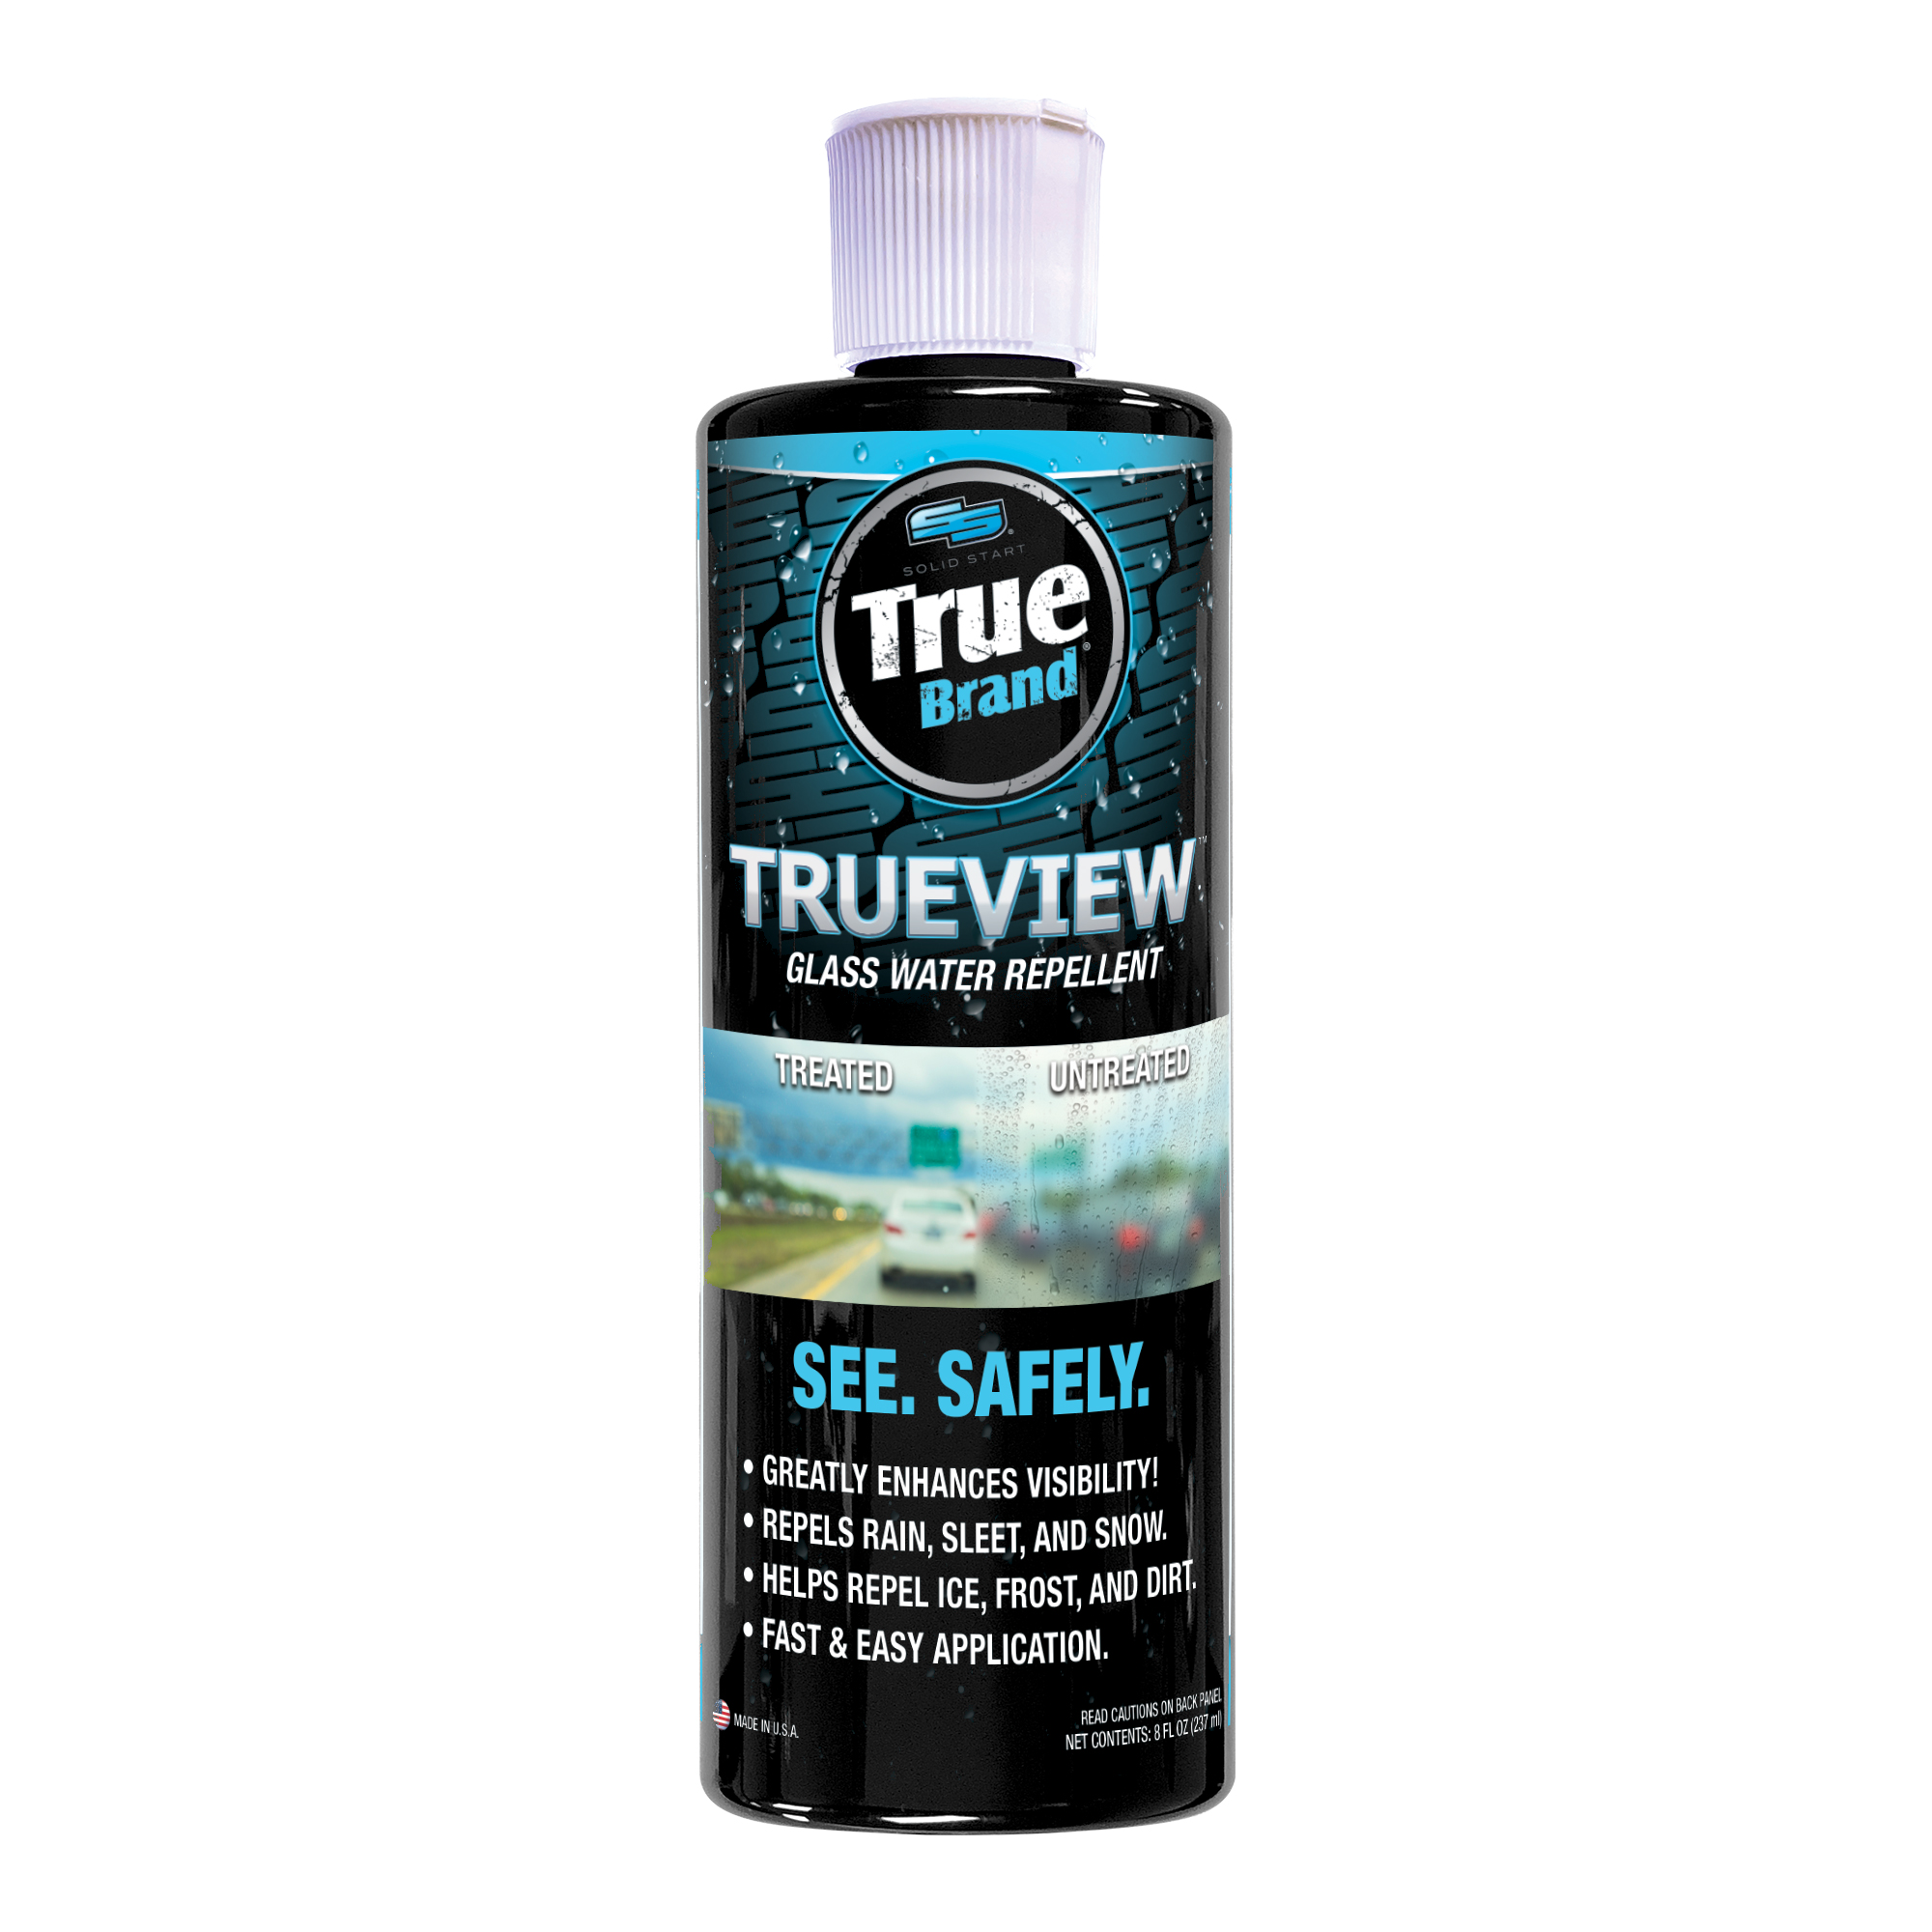 TrueView Glass Water Repellent - Solid Start